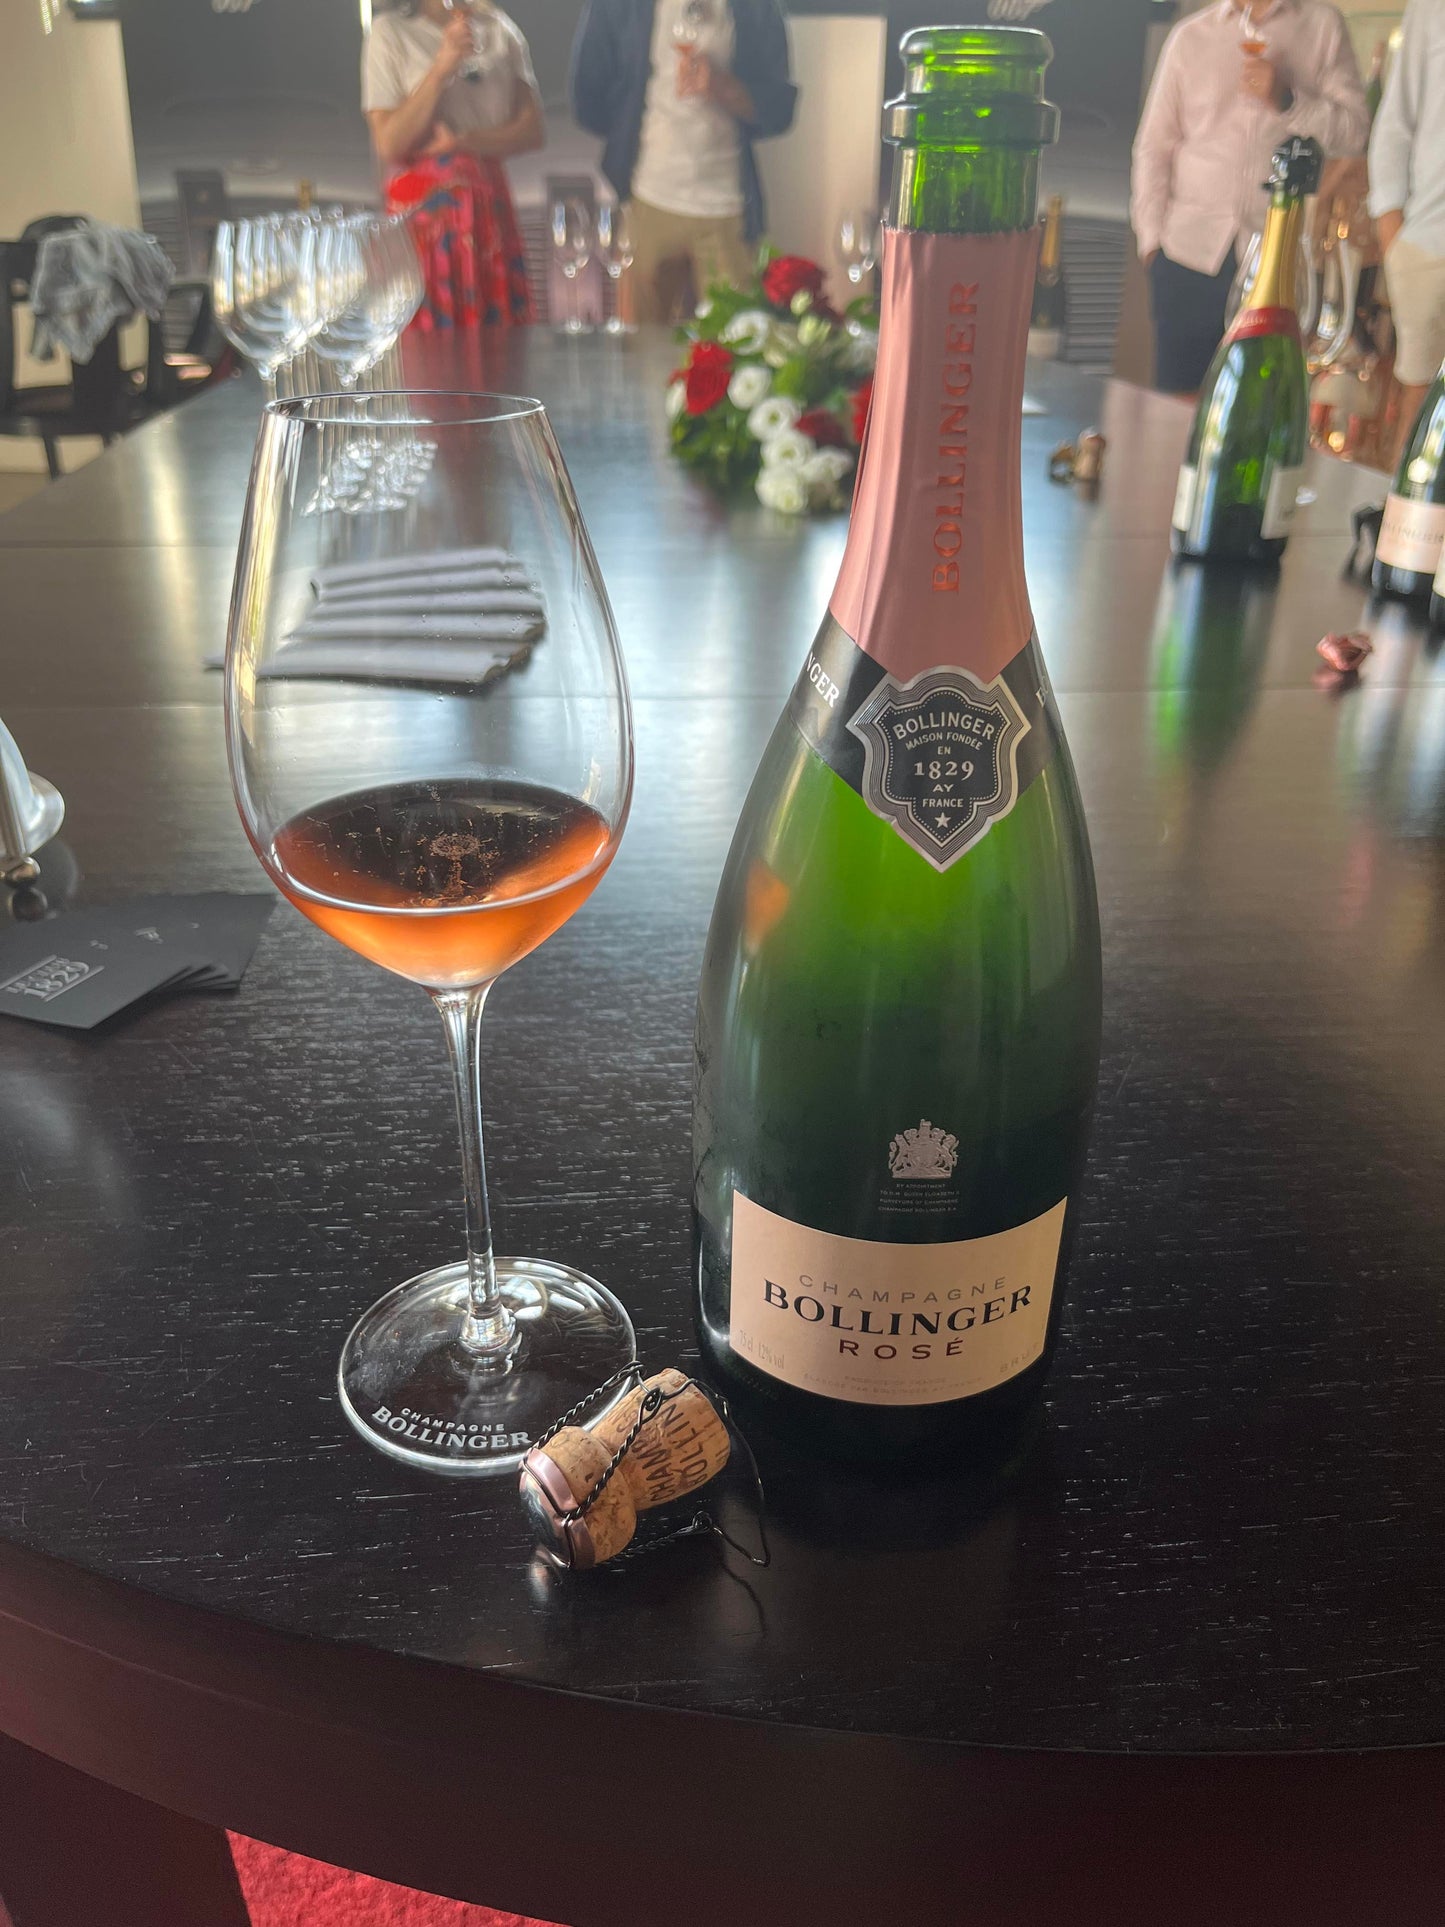 Bollinger rosé champagne - Non vintage - champagne season - champagne tasting